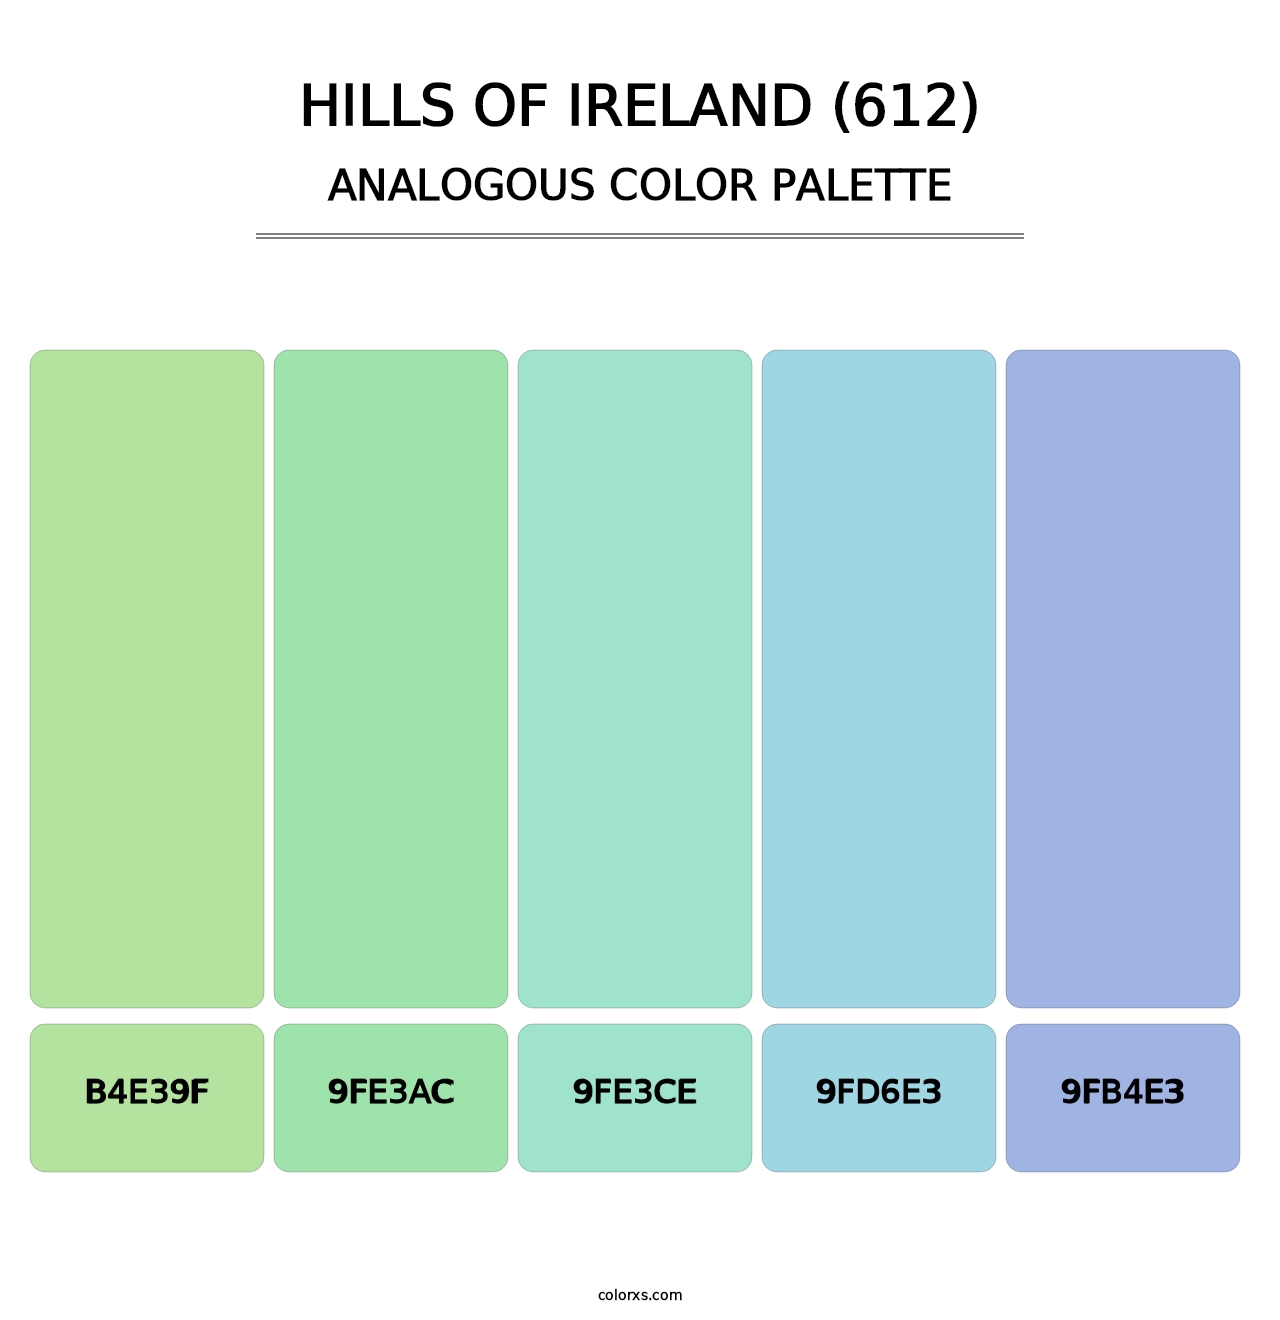 Hills of Ireland (612) - Analogous Color Palette